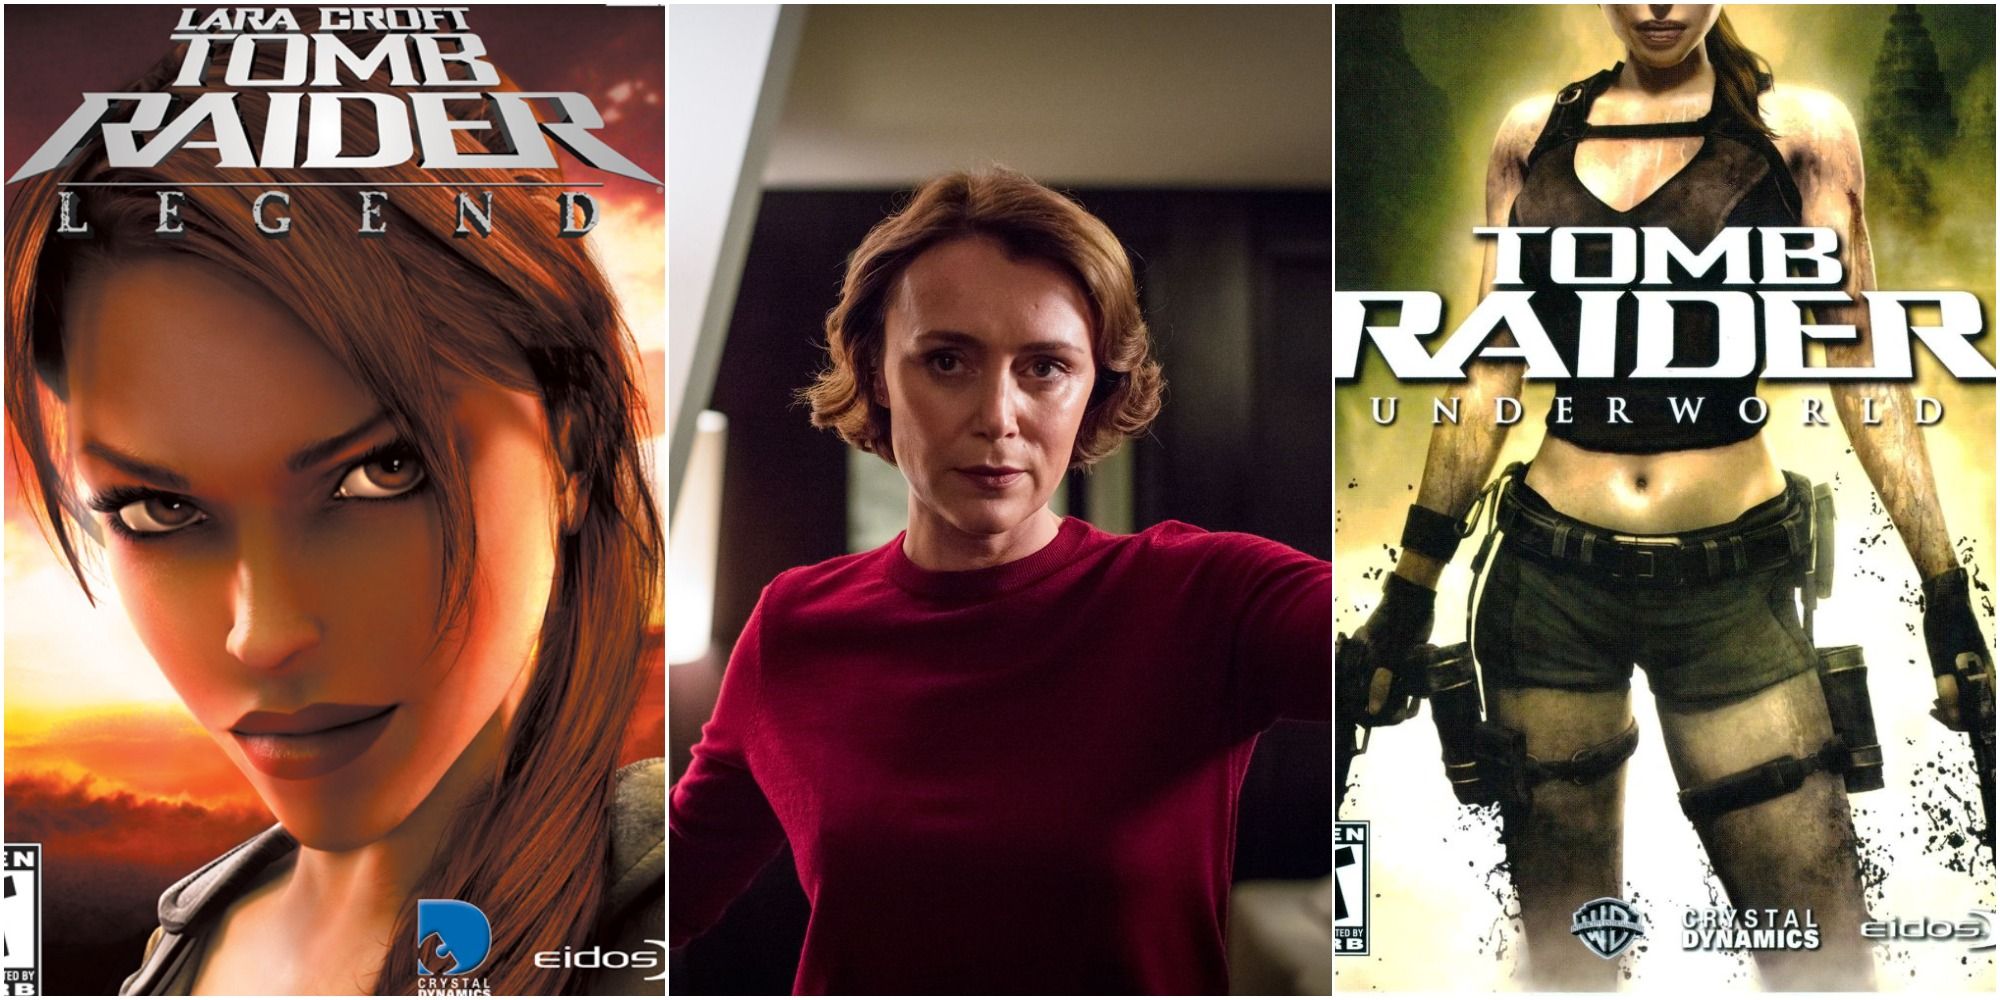 Keeley Hawes as Lara Croft in Tomb Raider Legend and Tomb Raider Underworld